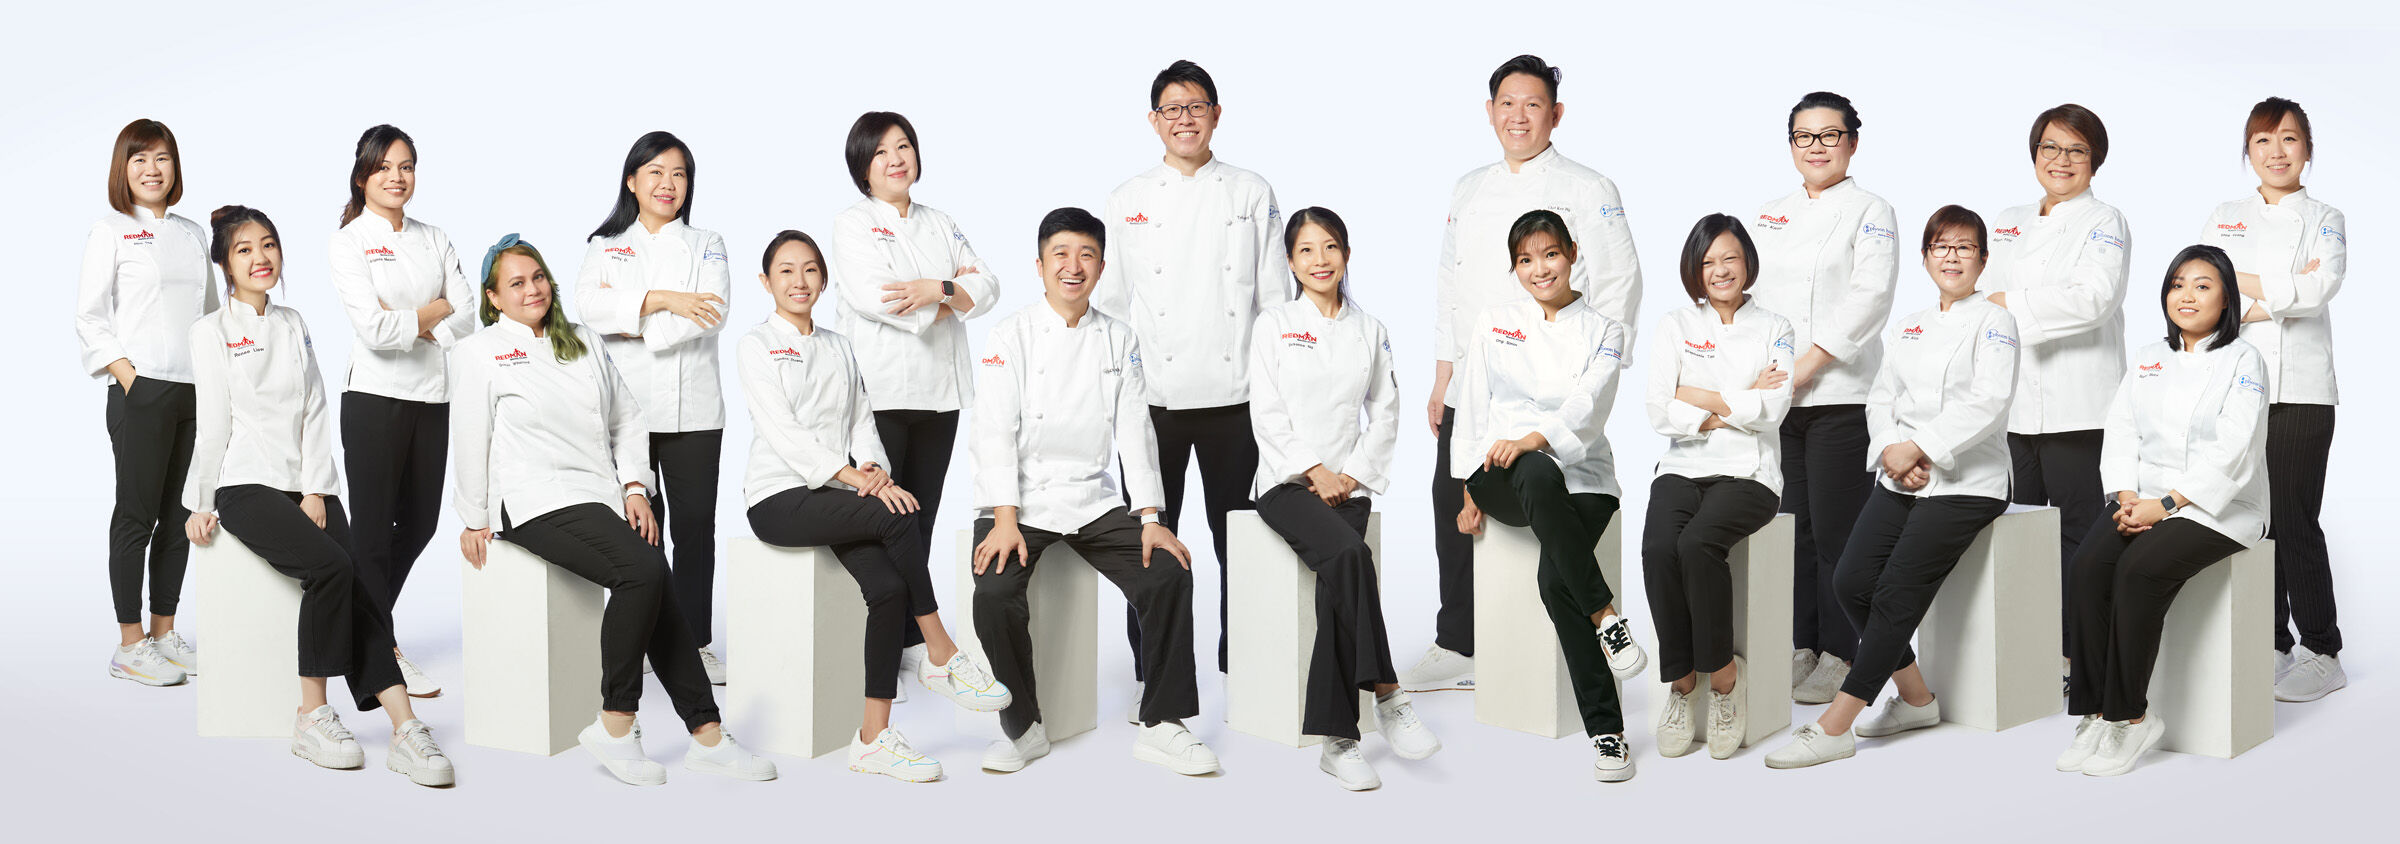 Baking Studio Group of Chefs